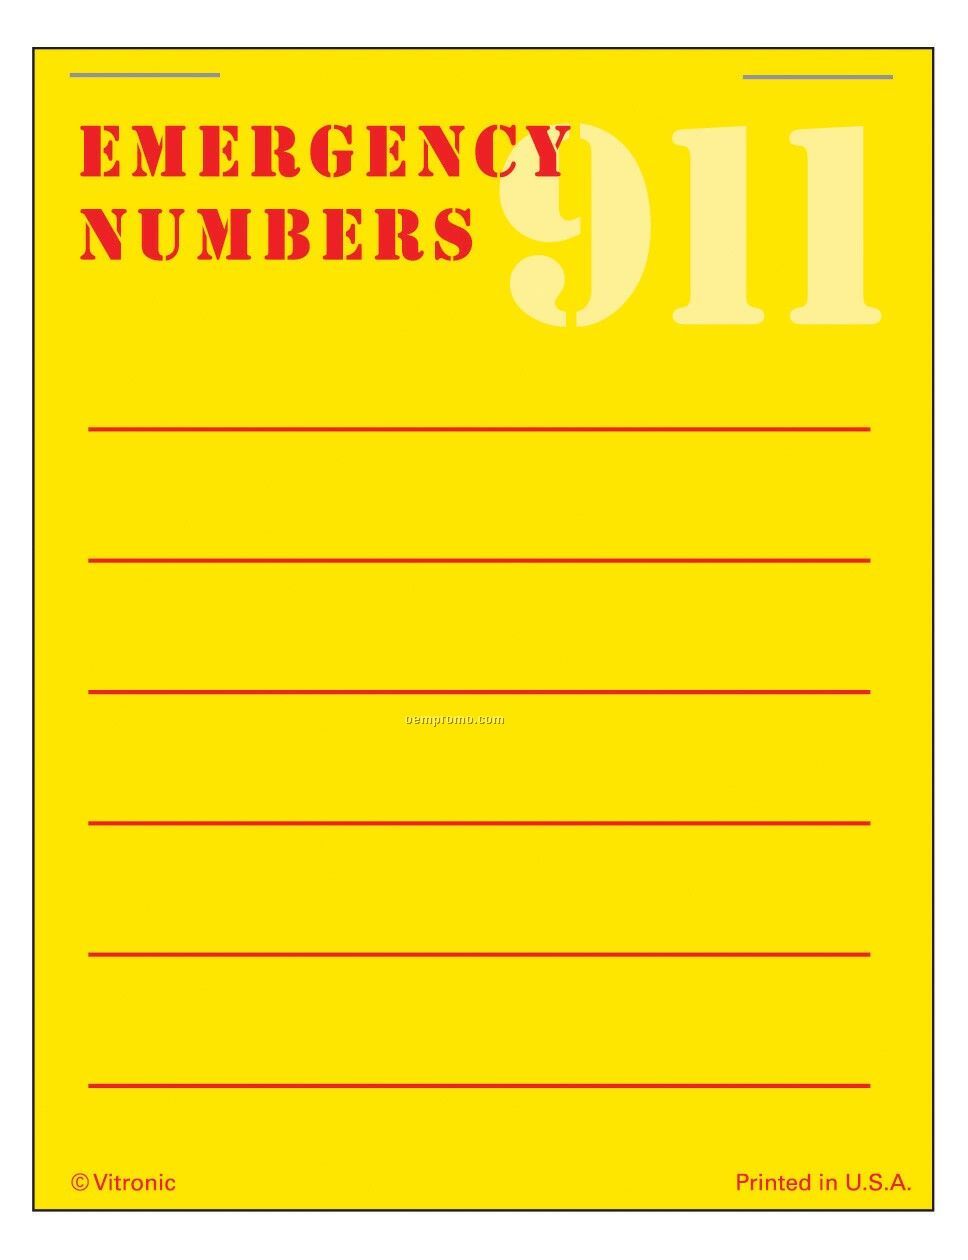 Super Size Emergency # List Press-n-stick Calendar Pad (Thru 8/01/11)